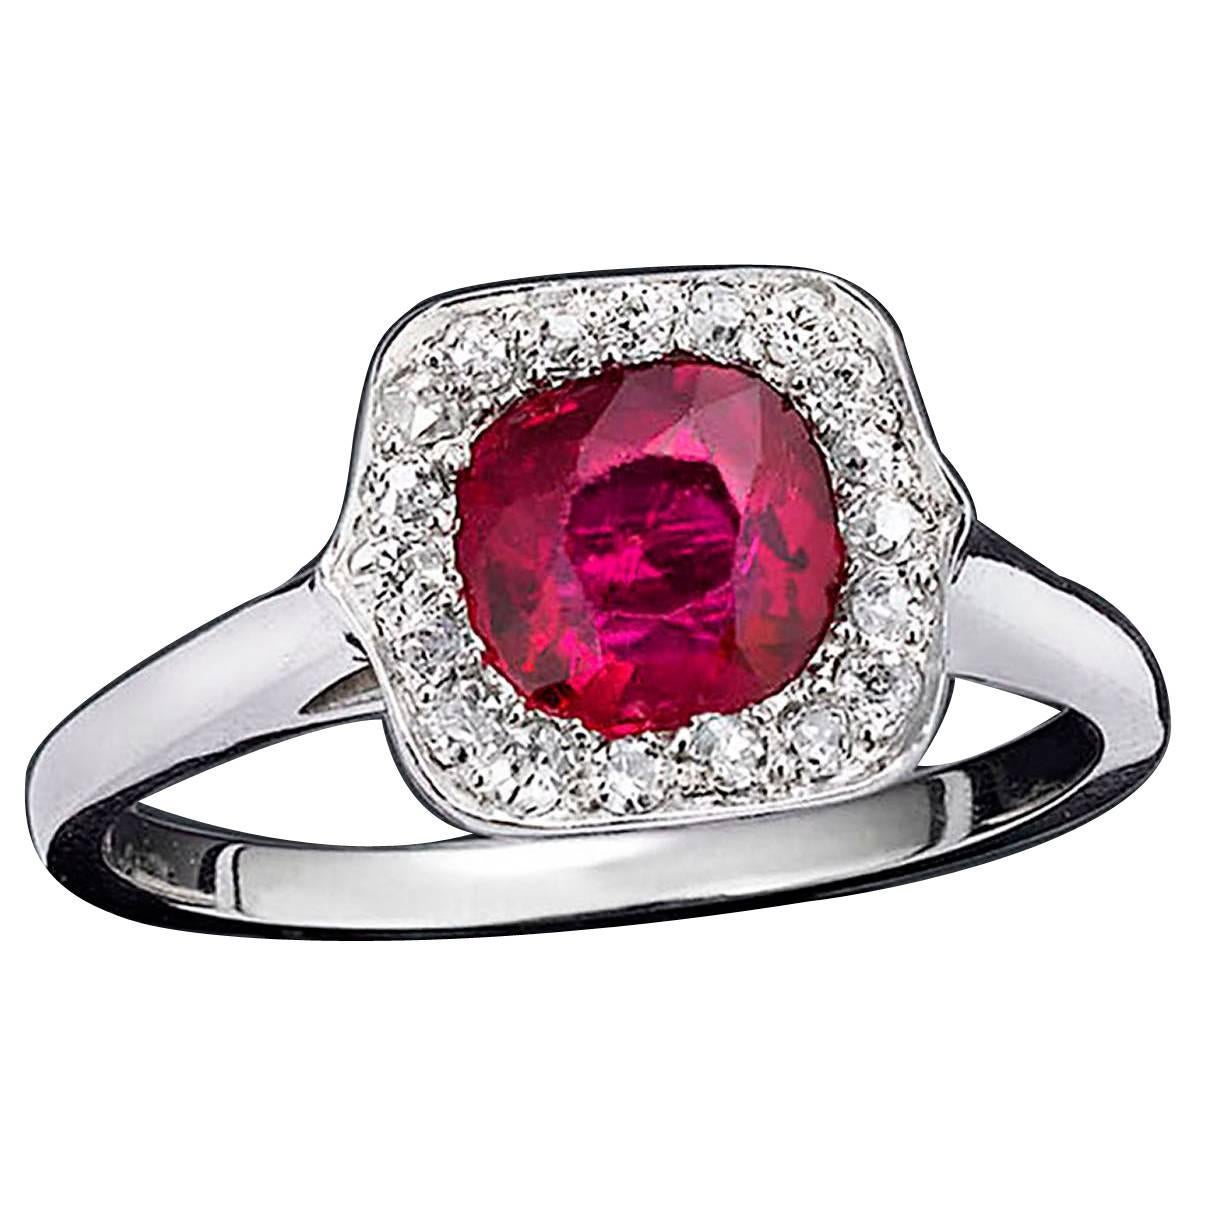 Untreated Burma Ruby Diamond Ring